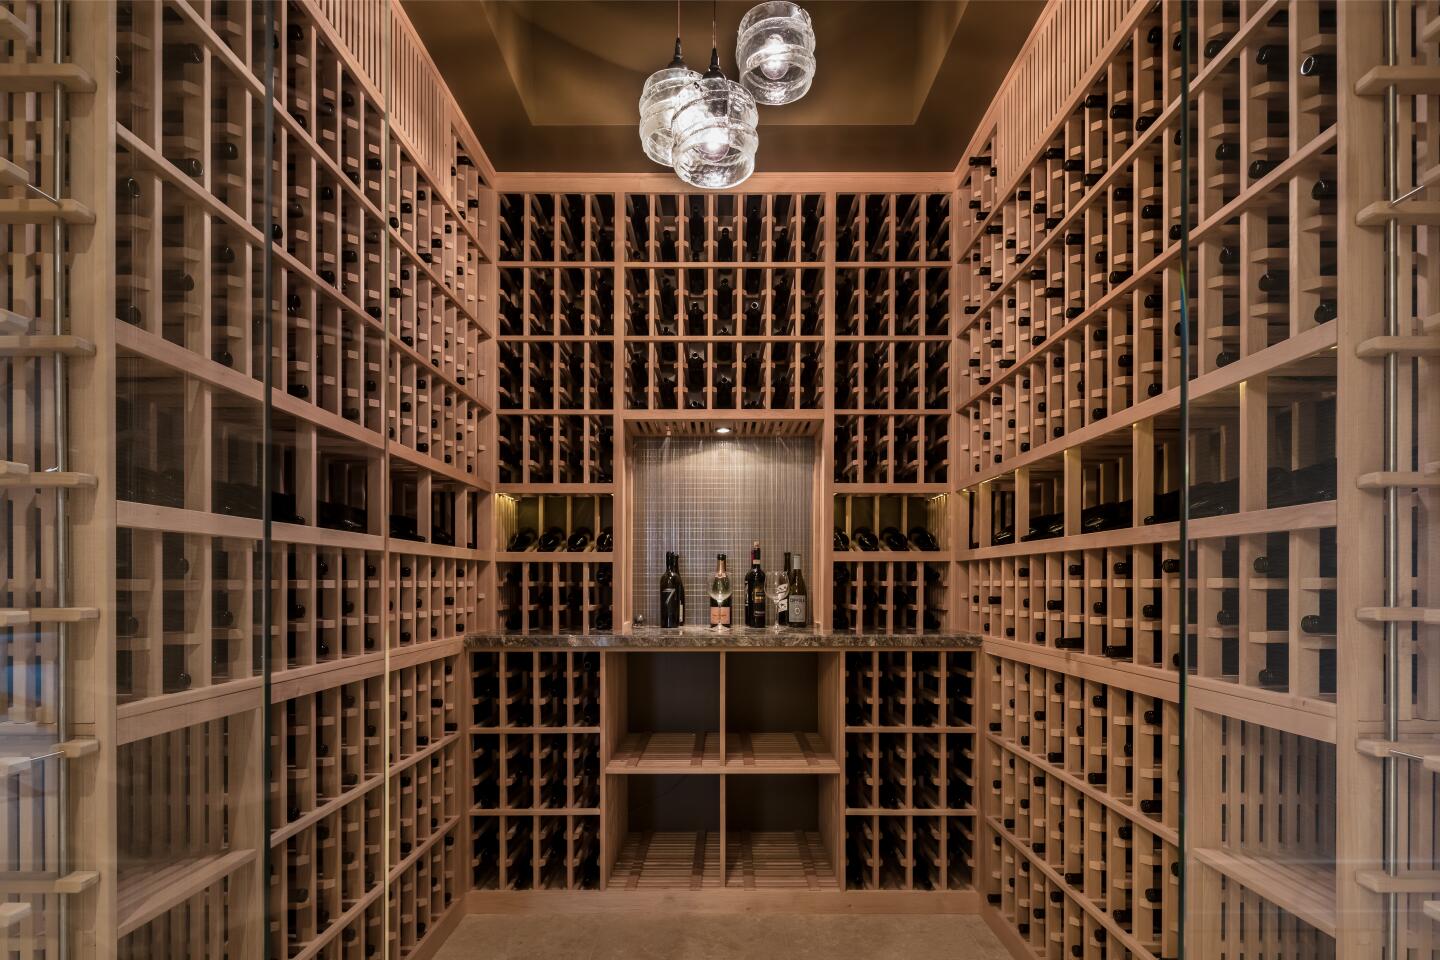 The wine cellar.